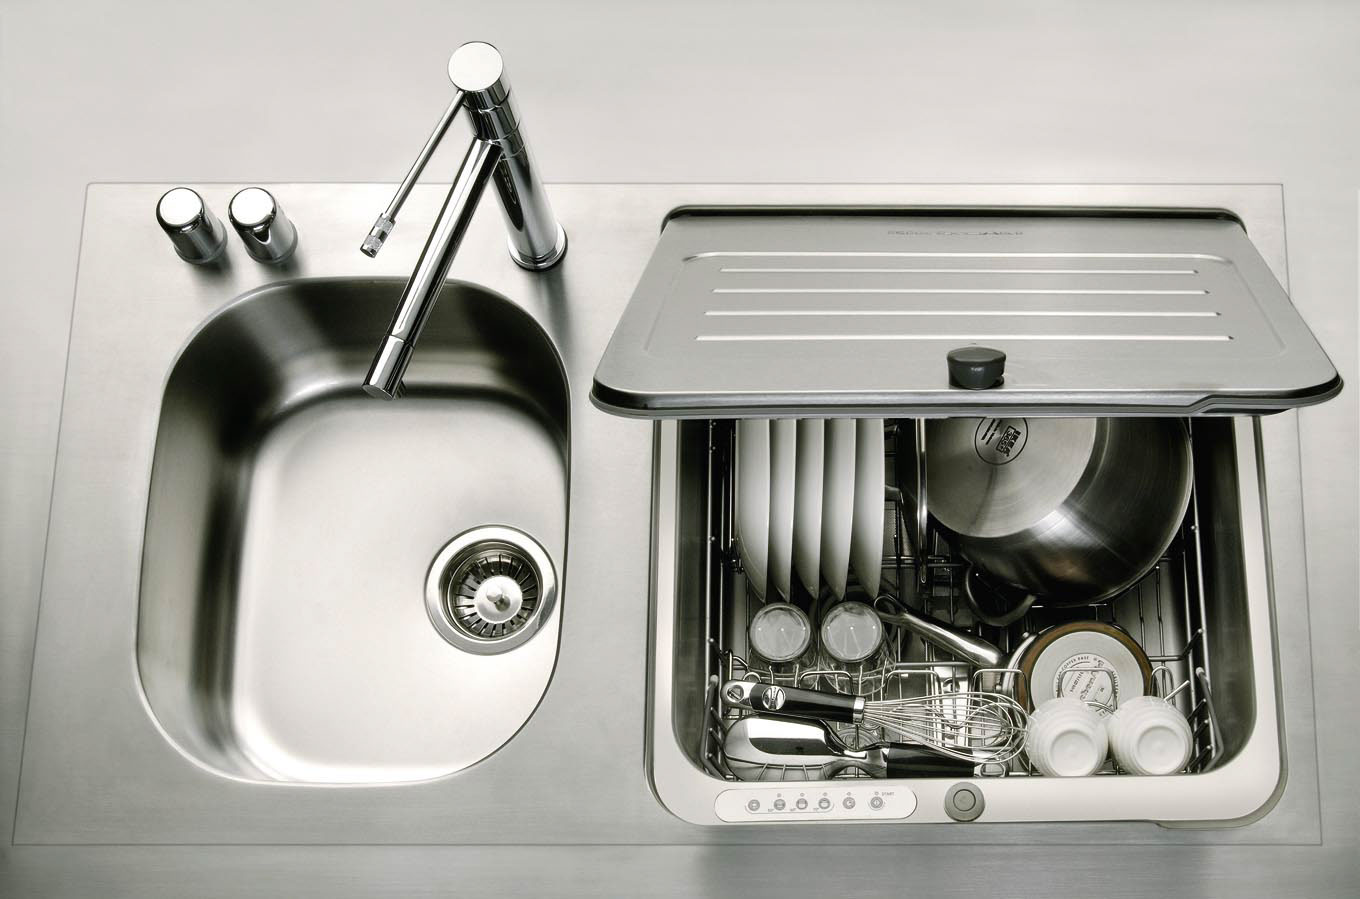 Посудомоечная машина быстрая мойка. Посудомоечная машина briva in-Sink. Посудомоечная машина с вертикальной загрузкой briva in Sink. Kitchenaid briva in-Sink Dishwasher. Kitchenaid от компании briva посудомоечная машина.